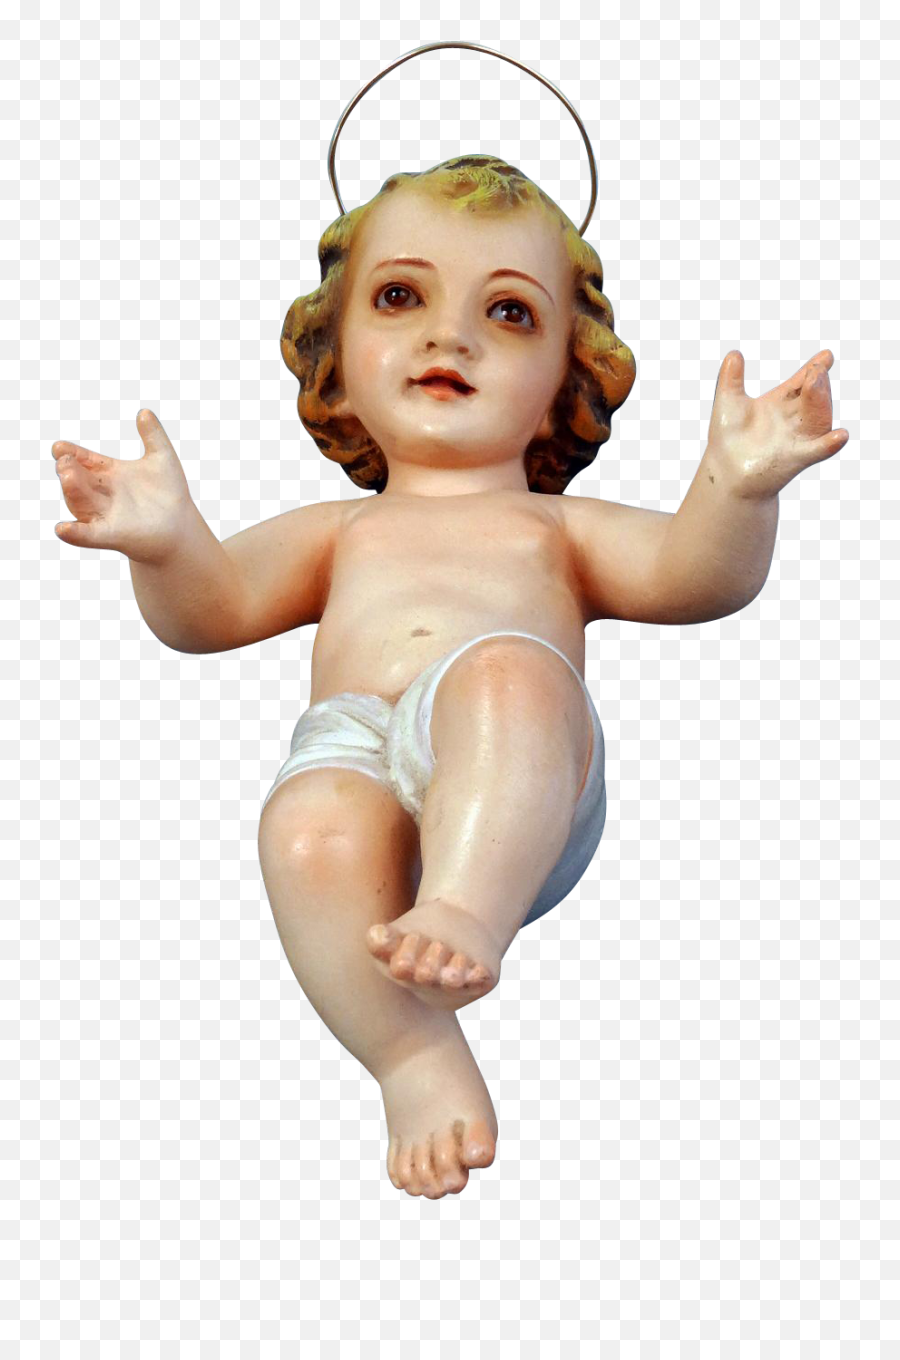 Baby Jesus Png Transparent Image Arts - Baby Jesus Transparent Background,Baby Transparent Background